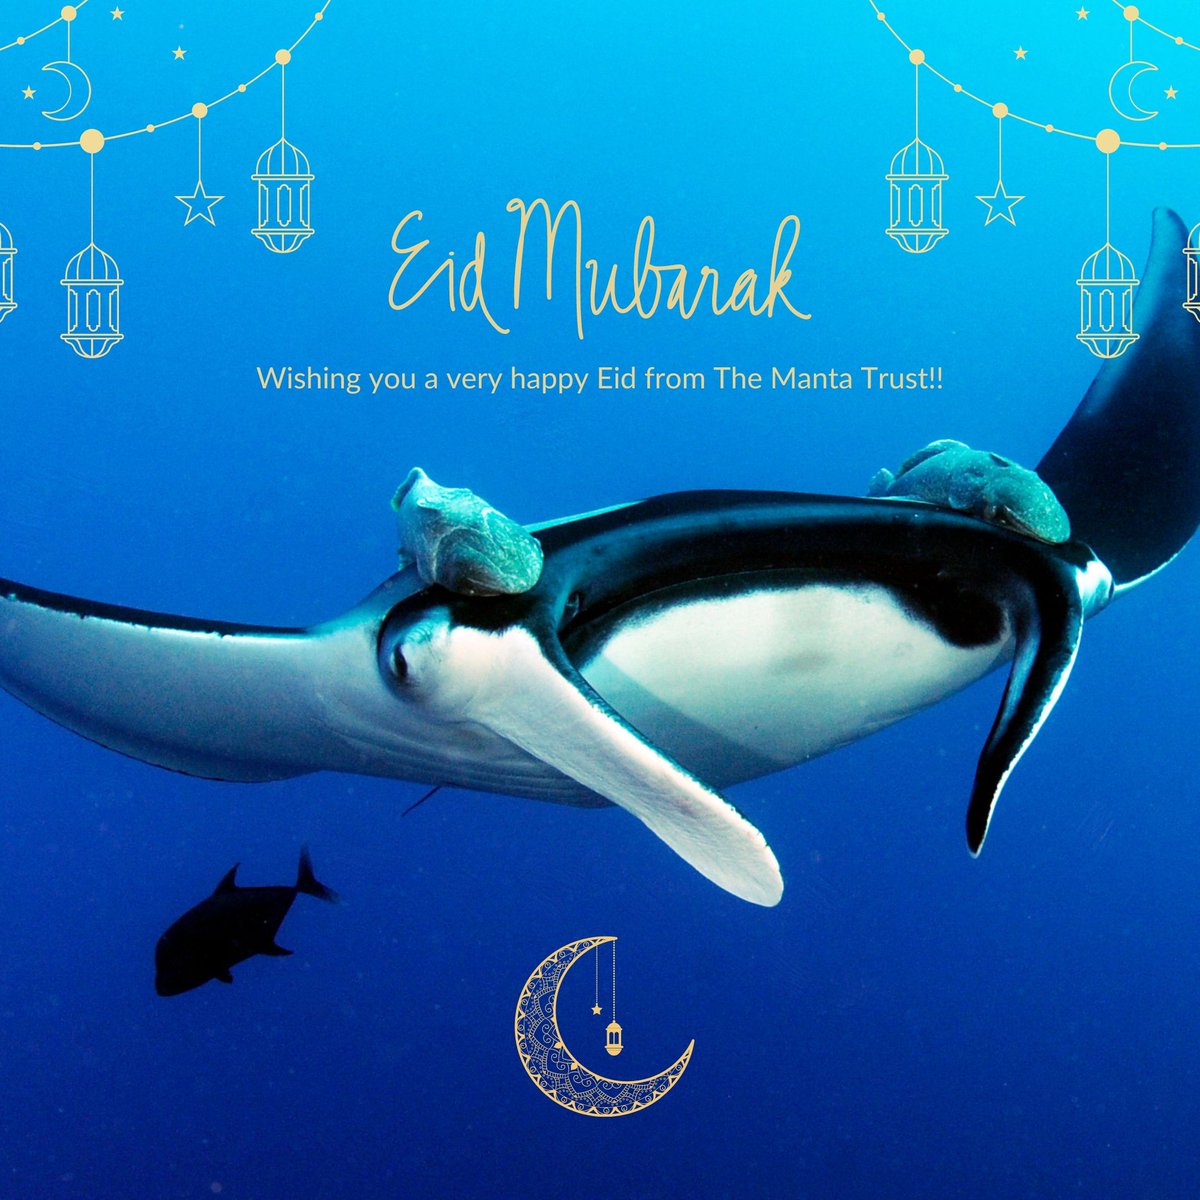 Eid Mubarak 🌙 Wishing those who celebrate a very Happy Eid, with lots of joy and happiness from the Manta Trust Team 🌙🌟🌊 #EidMubarak #MantaTrust #MarineConservation #Maldives